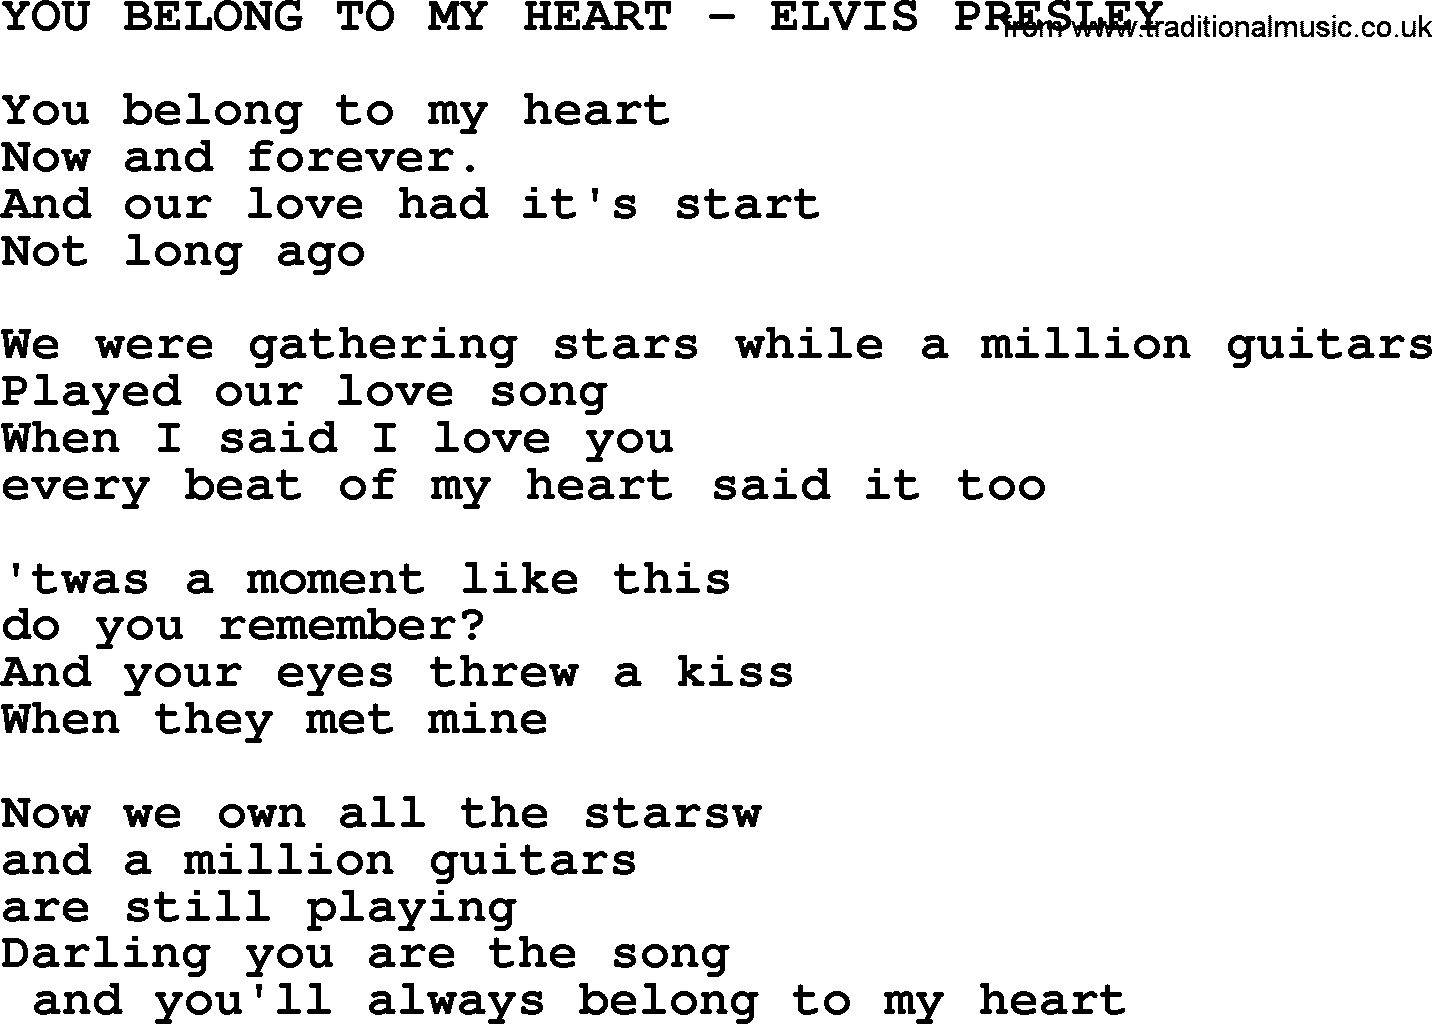 Elvis Presley song: You Belong To My Heart-Elvis Presley-.txt lyrics and chords